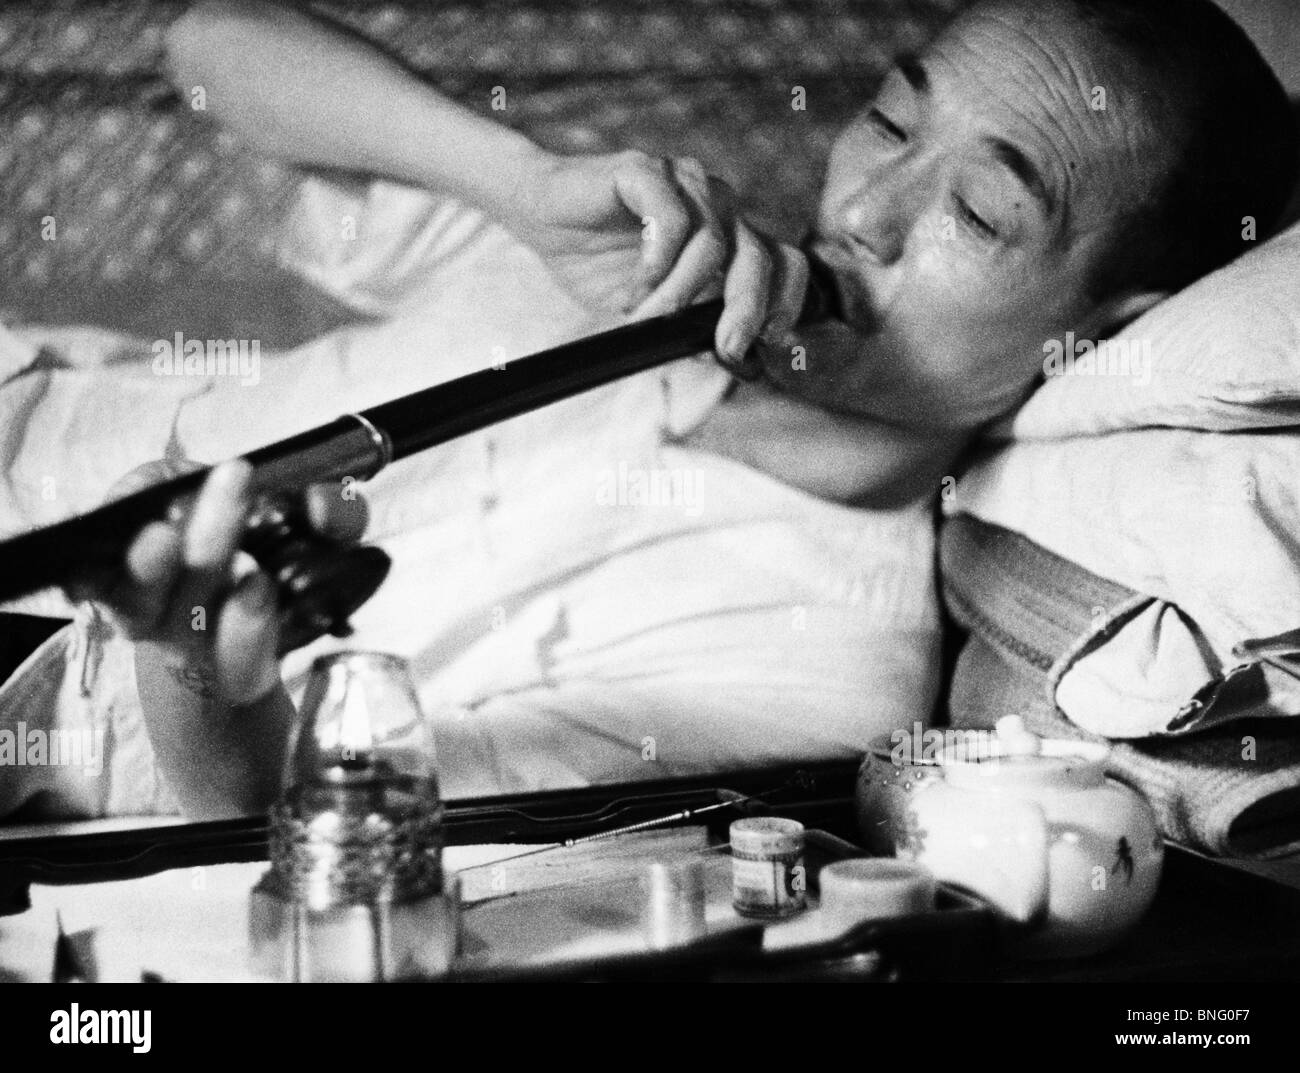 Mature man smoking opium Stock Photo